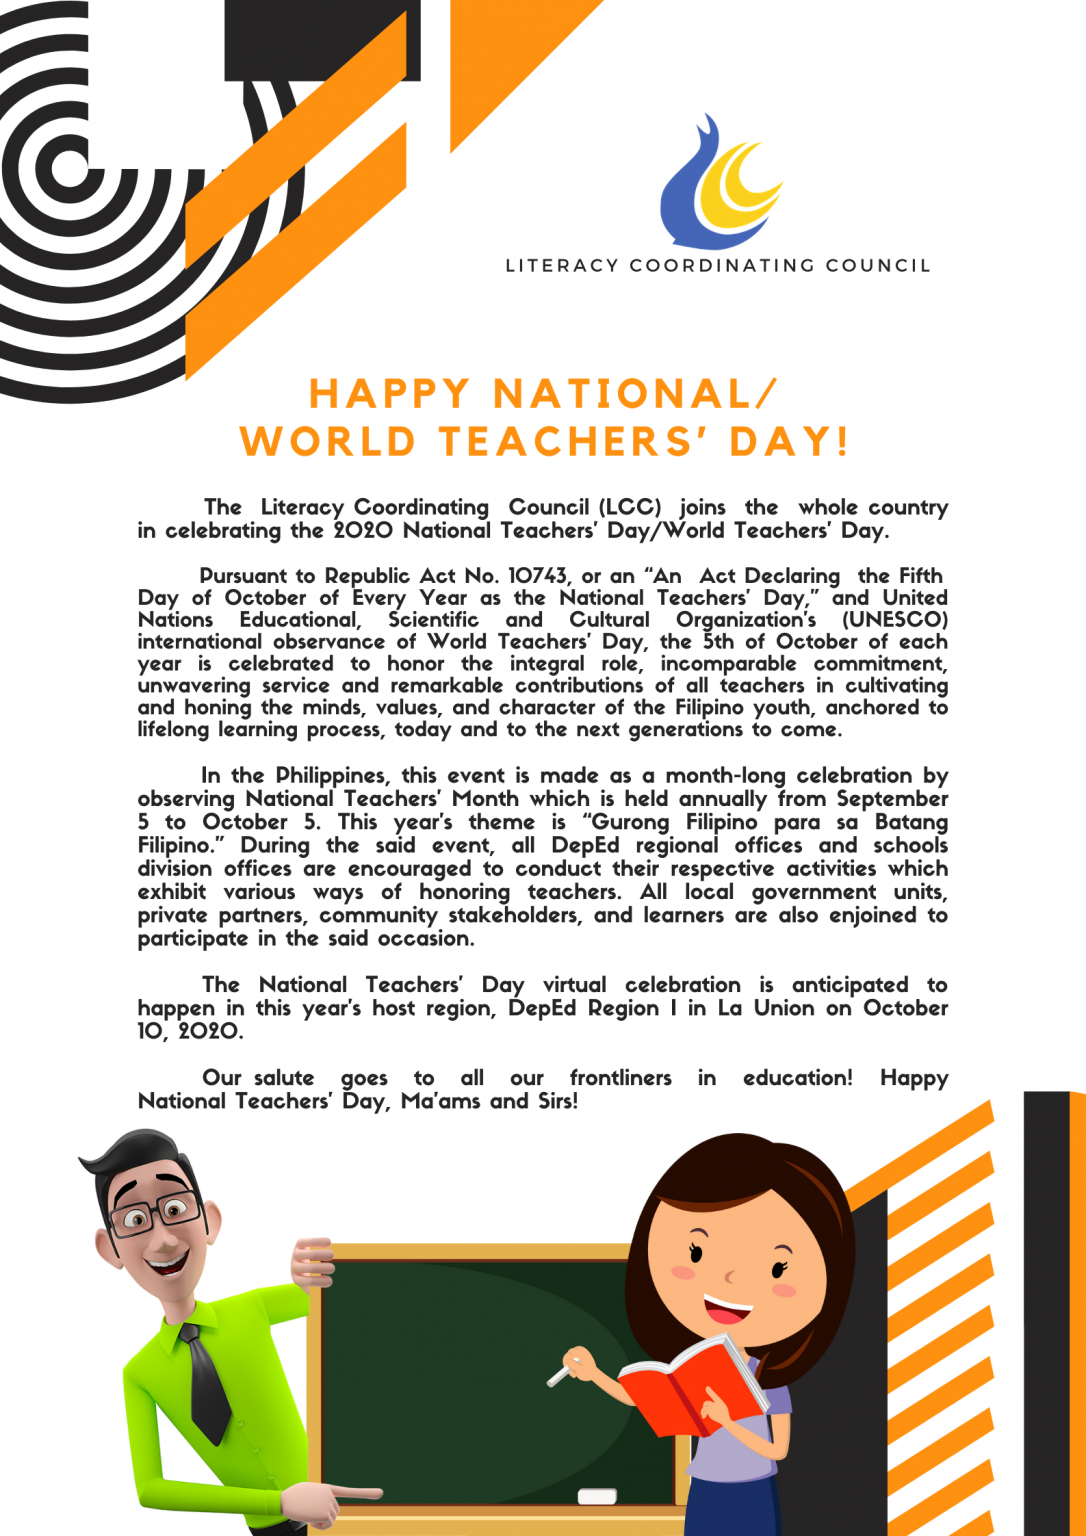 LCC Celebrates the 2020 National Teachers' Day/ World Teachers' Day